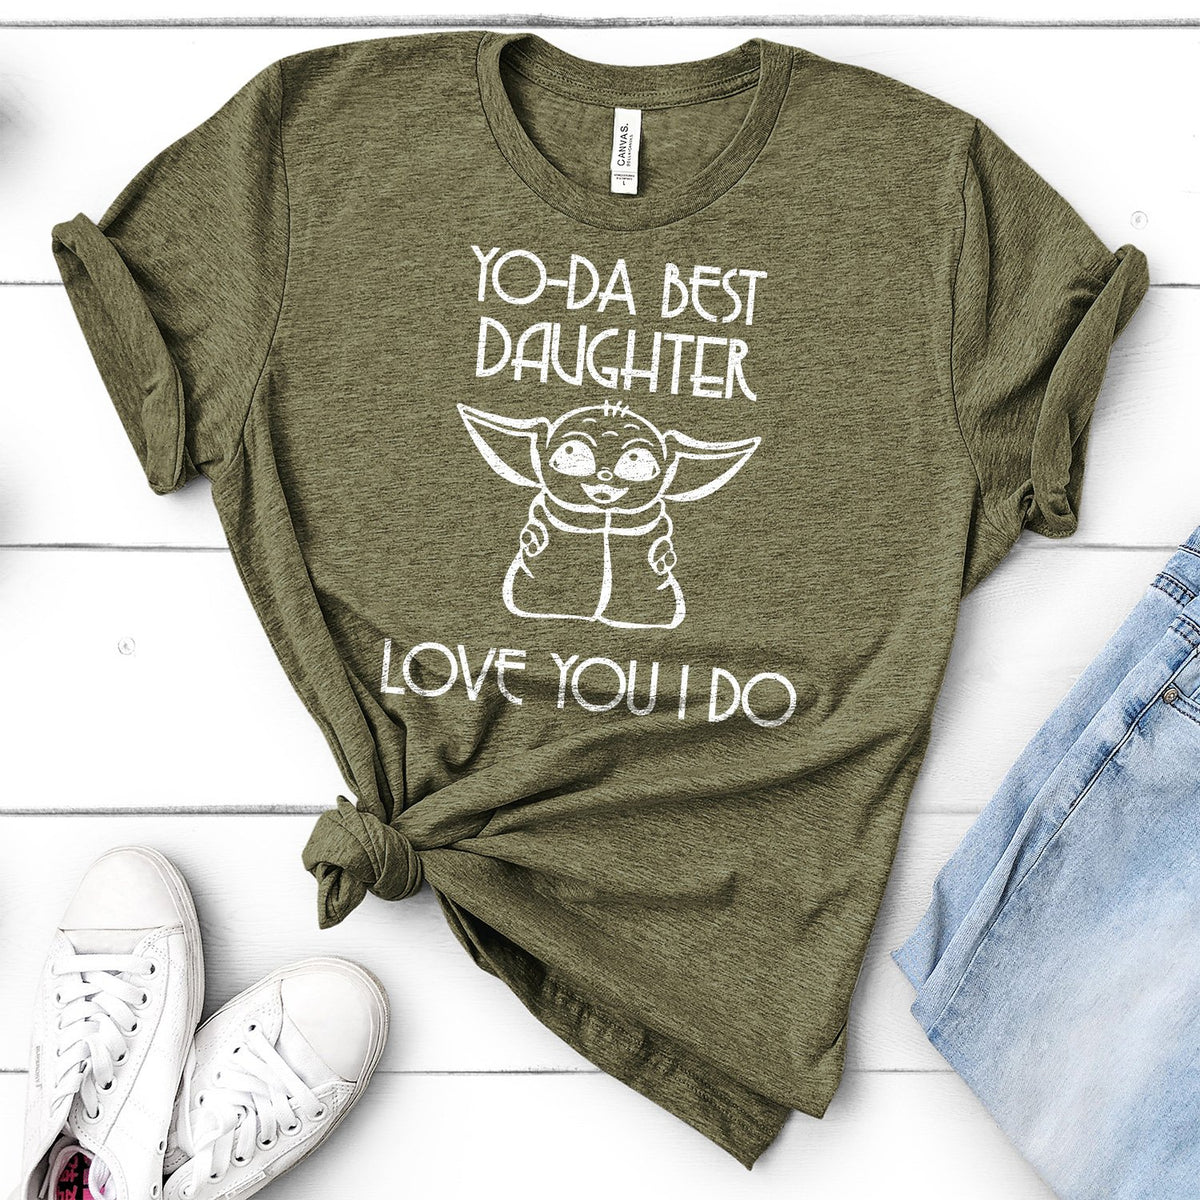 Yo-Da Best Daughter Love You I Do - Short Sleeve Tee Shirt